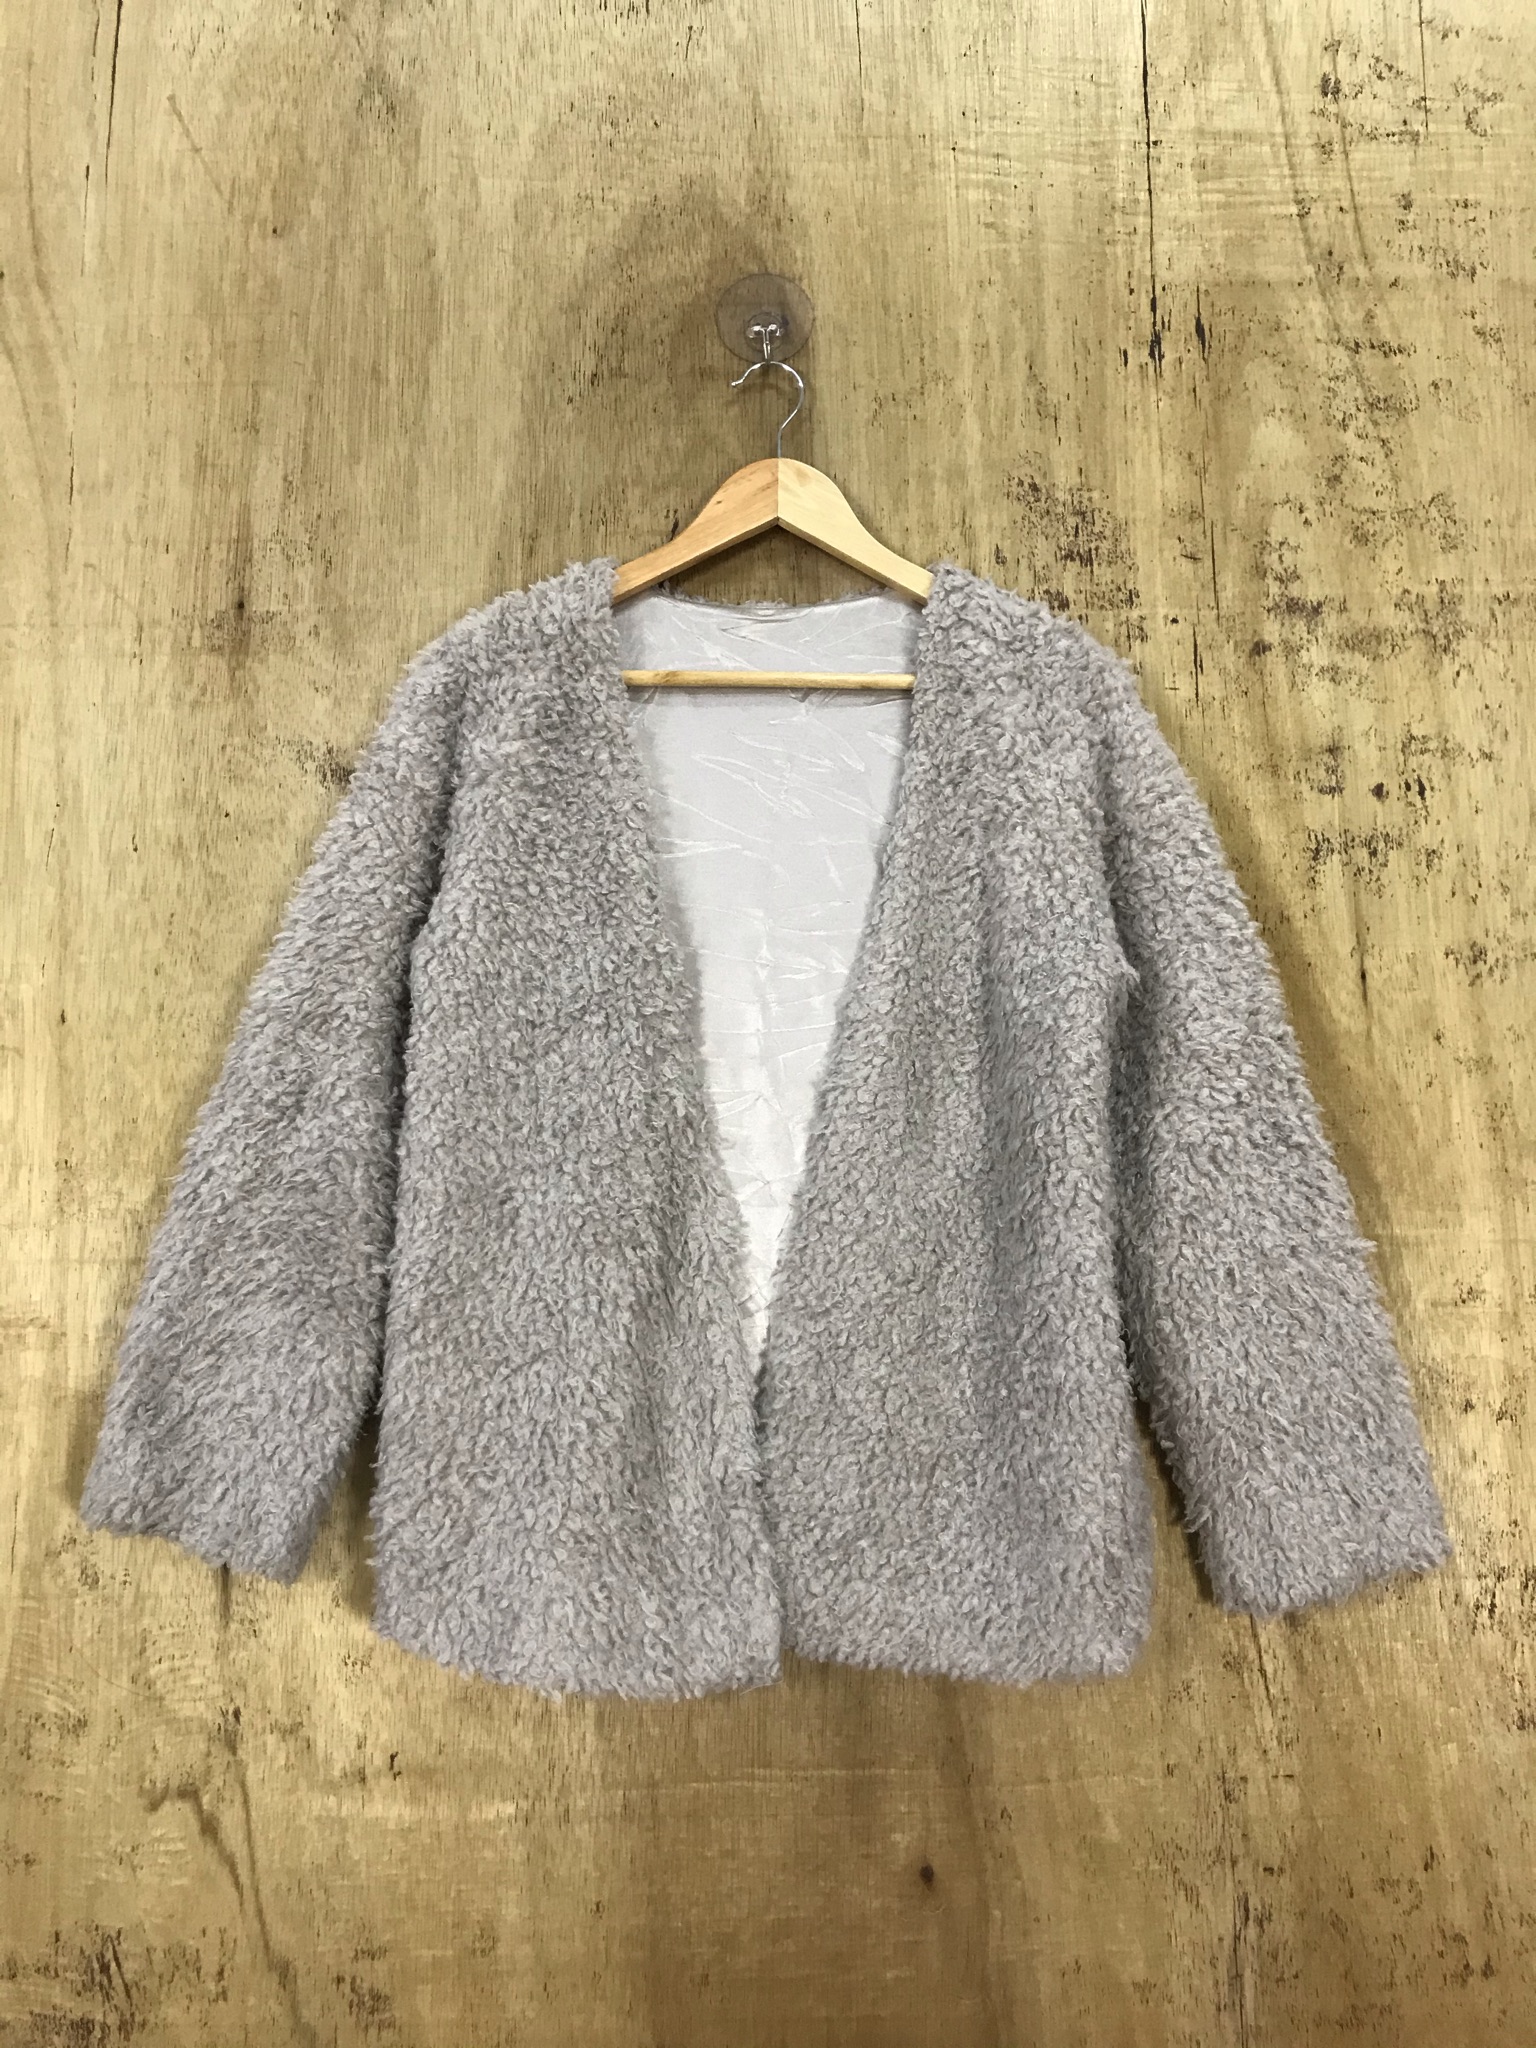 Japanese Brand - Unbrand Mohair Cozy Soft Fur Shaggy Open Knit Cardigan - 1